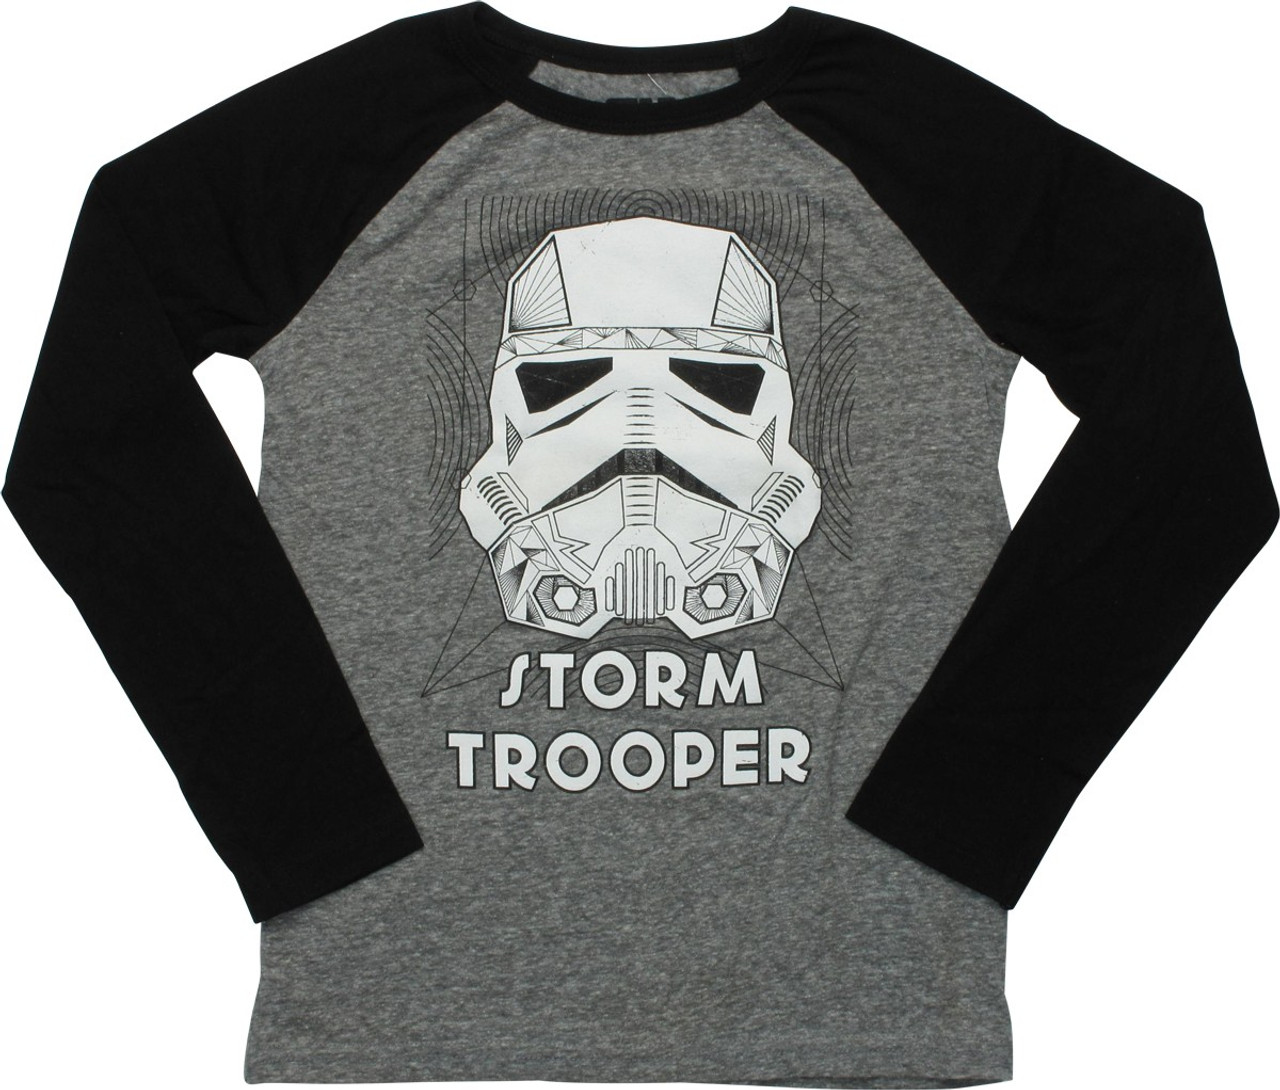 White Black Star Wars Troopers Logo Back Disney Cartoon Baseball Jersey  Shirt